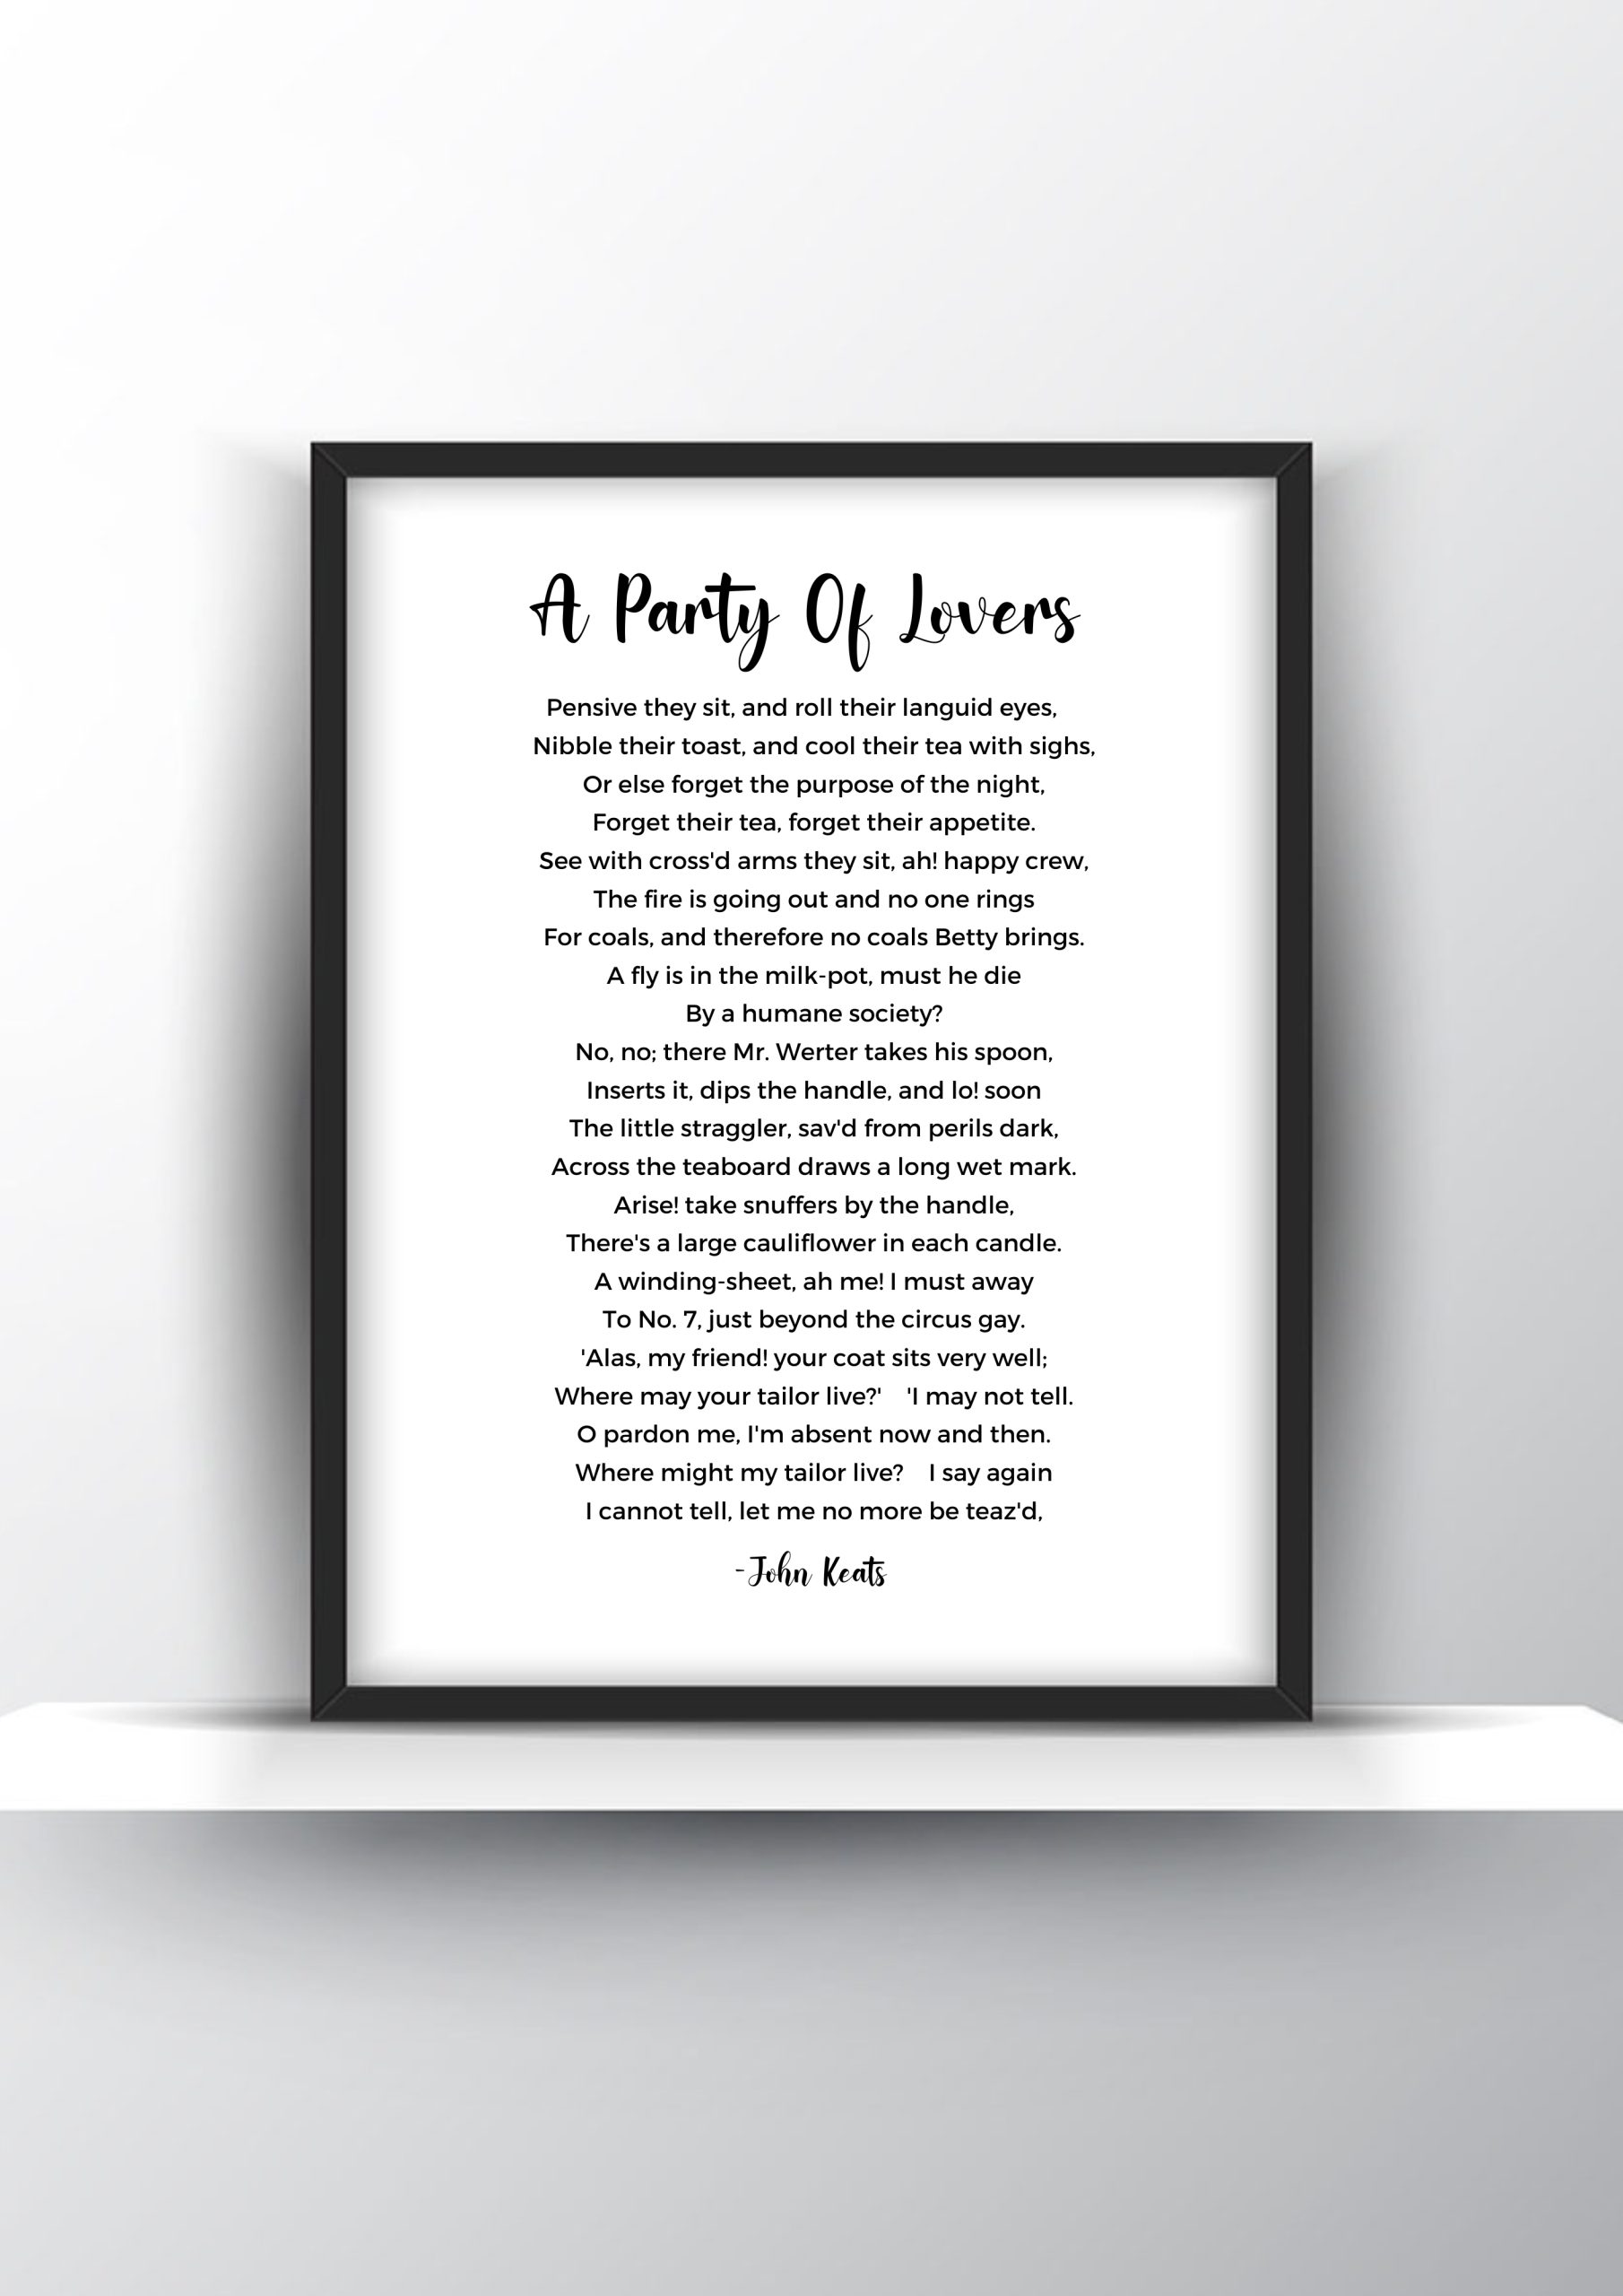 A Party of Lovers Poem by John Keats